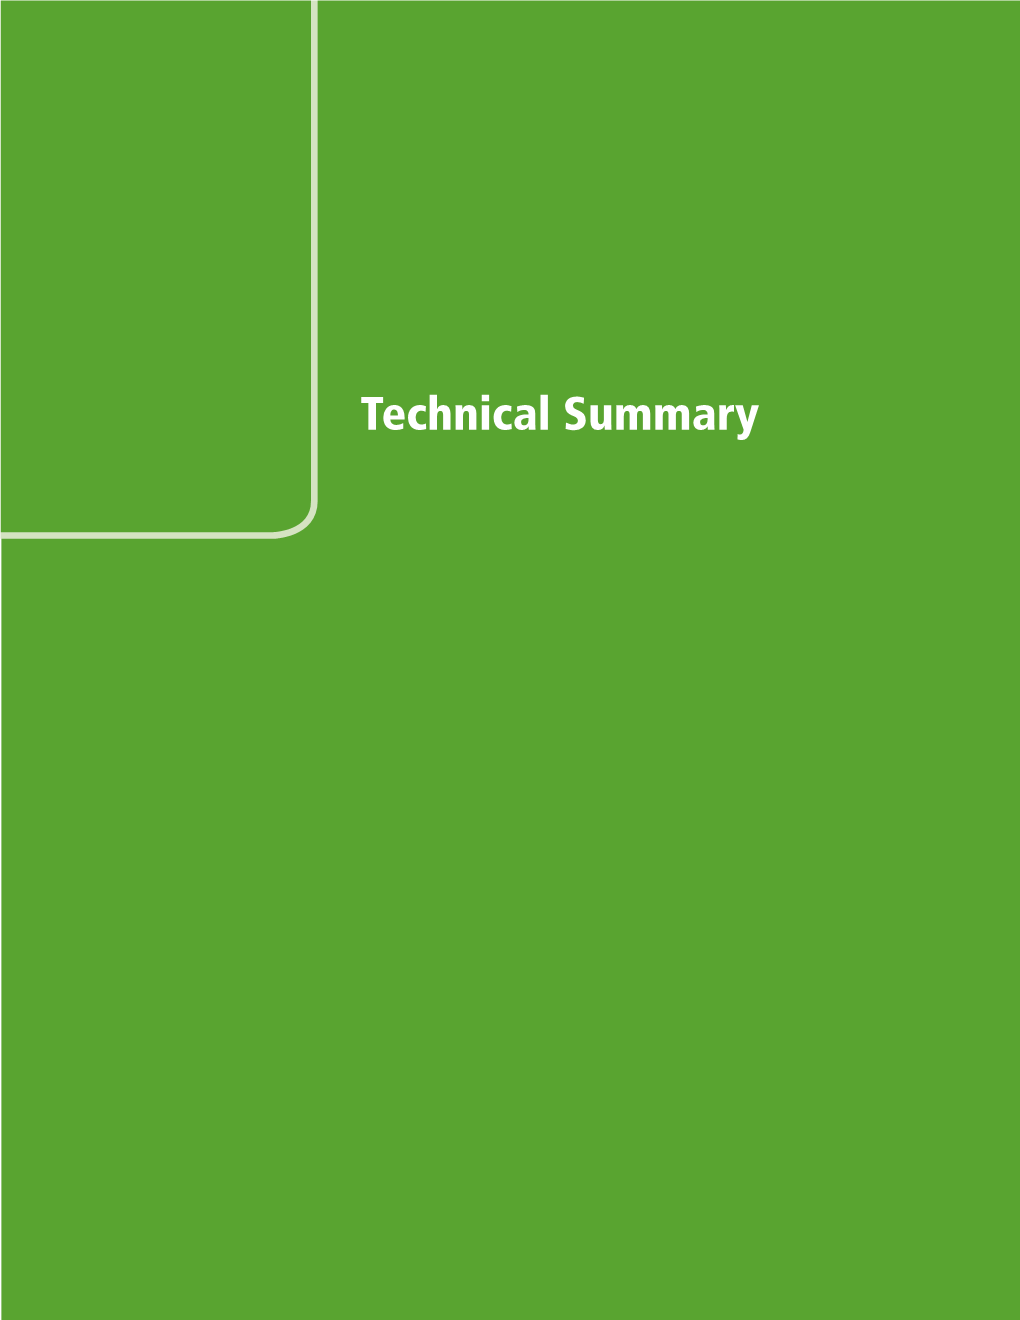 TS Technical Summary